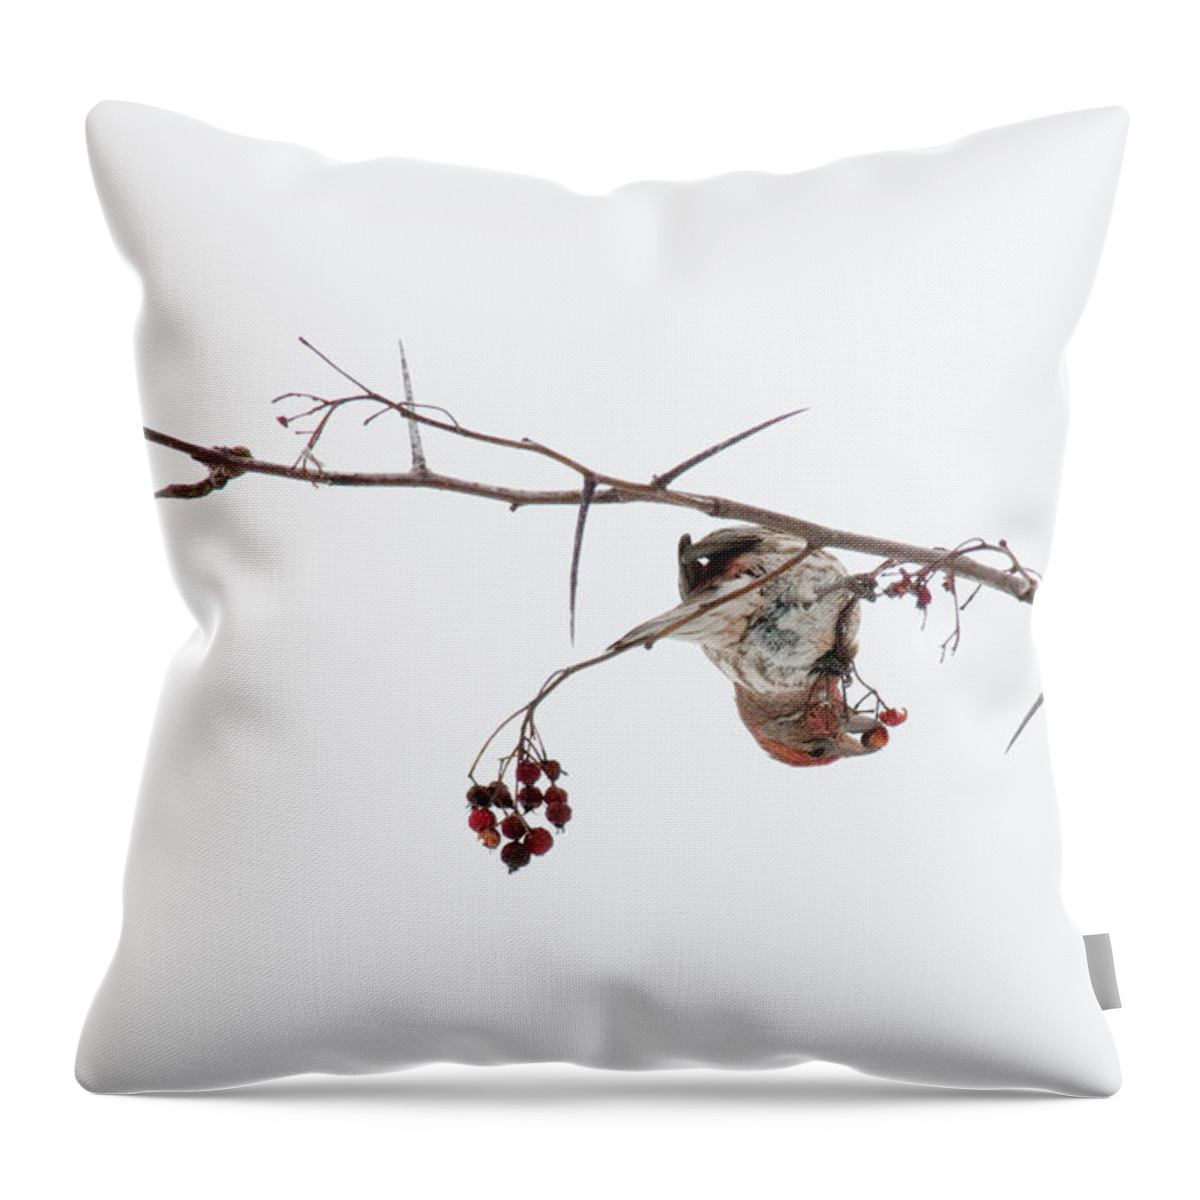 Bird Throw Pillow featuring the photograph Bird Eating Berry by David Arment